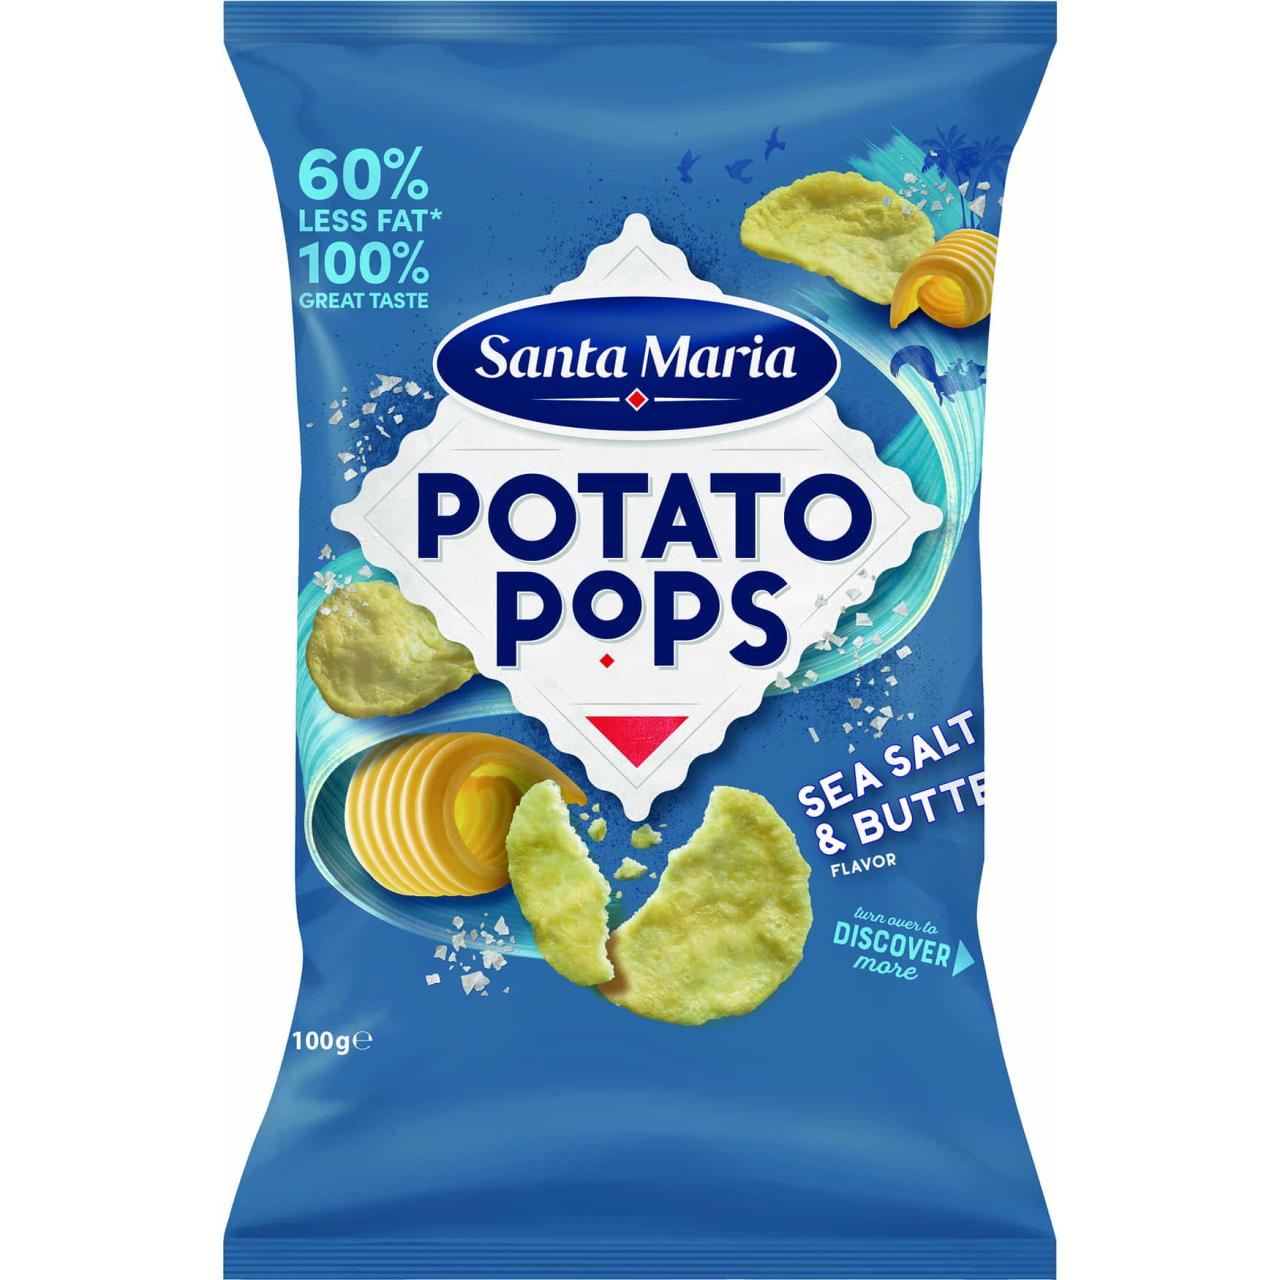 Santa Maria Potato Pops Sea Salt & Butter 100g